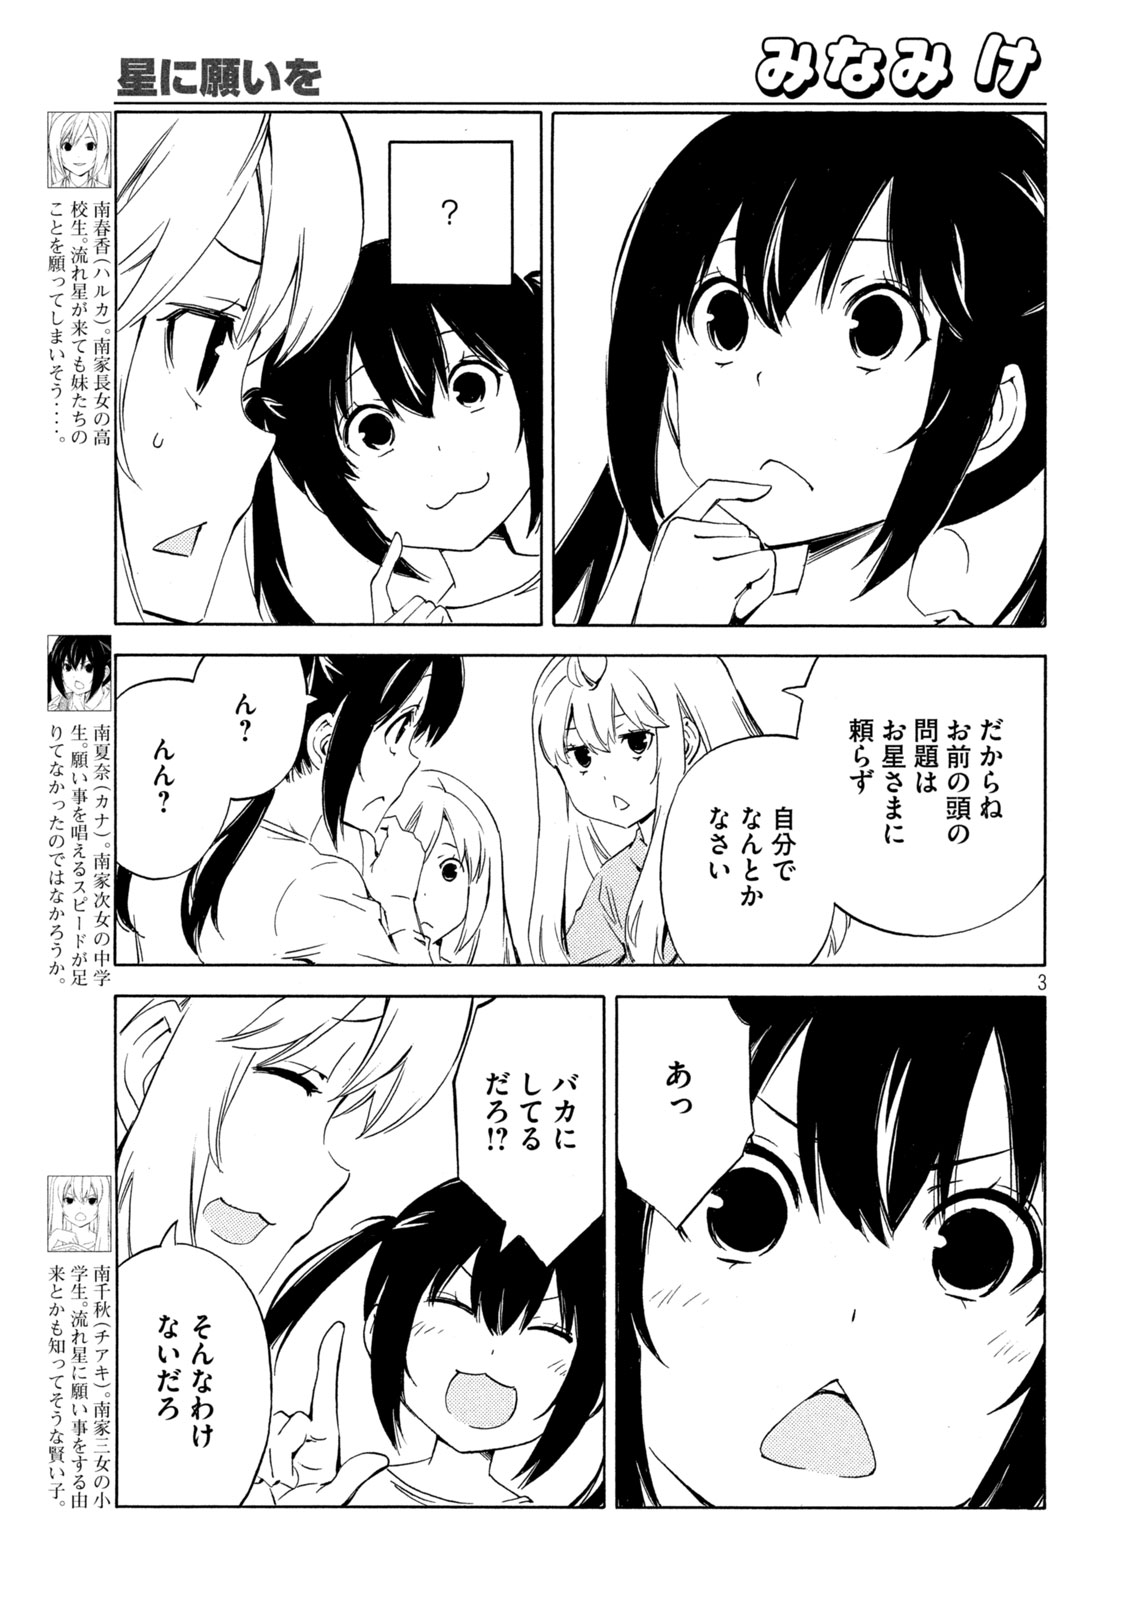 Minami-ke - Chapter 481 - Page 3